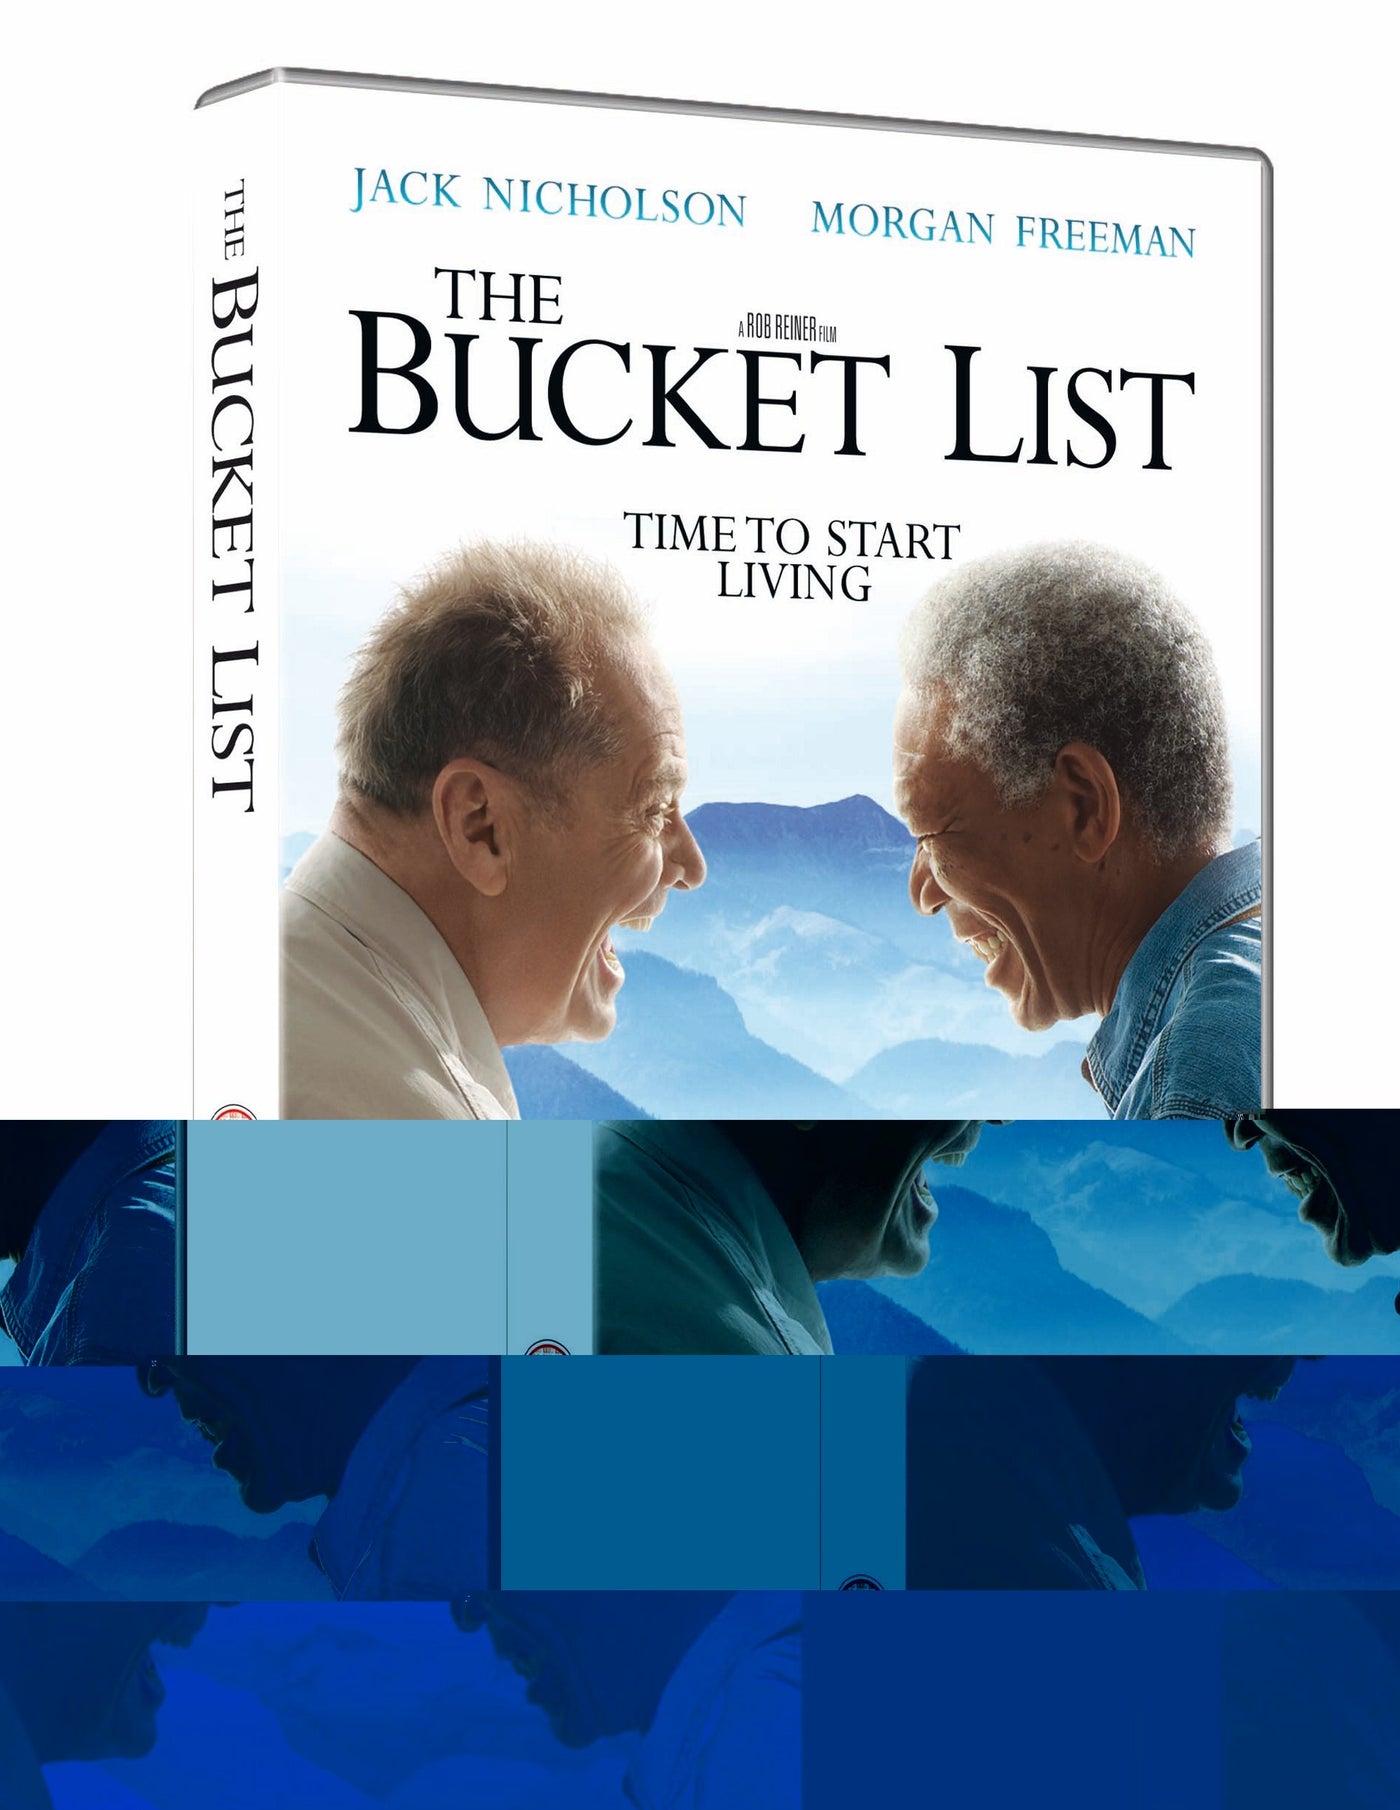 The Bucket List [2008] (DVD)